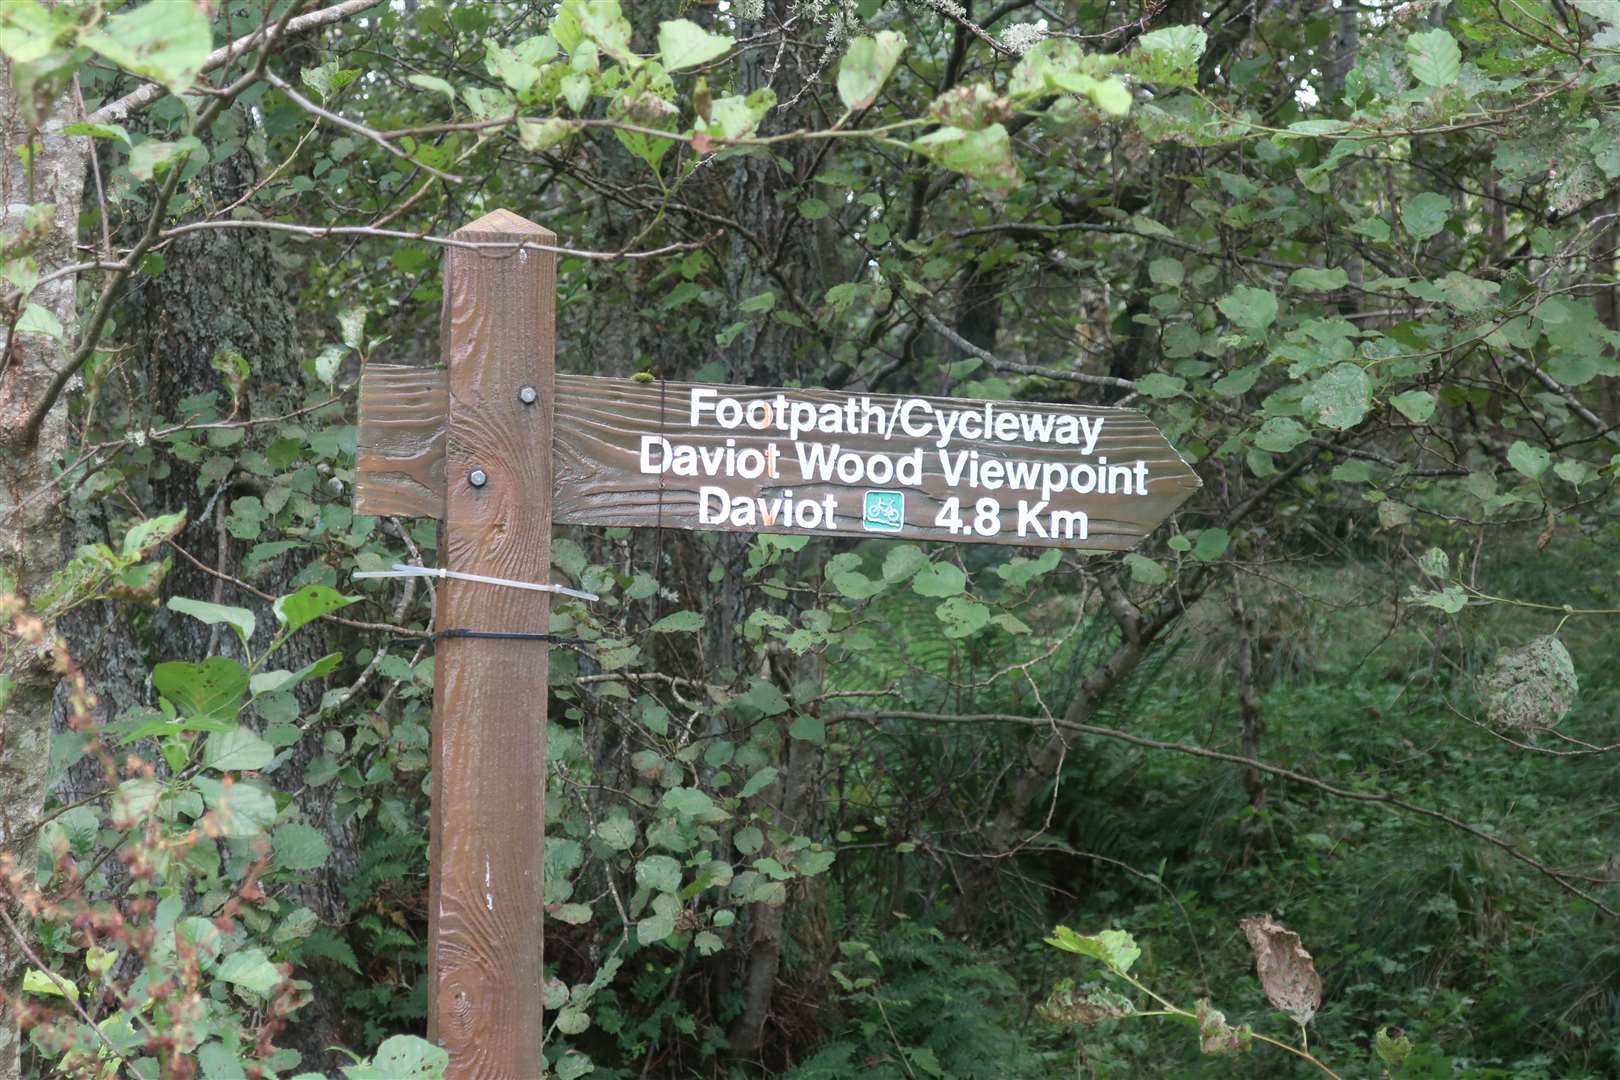 Cycle path sign to Daviot.